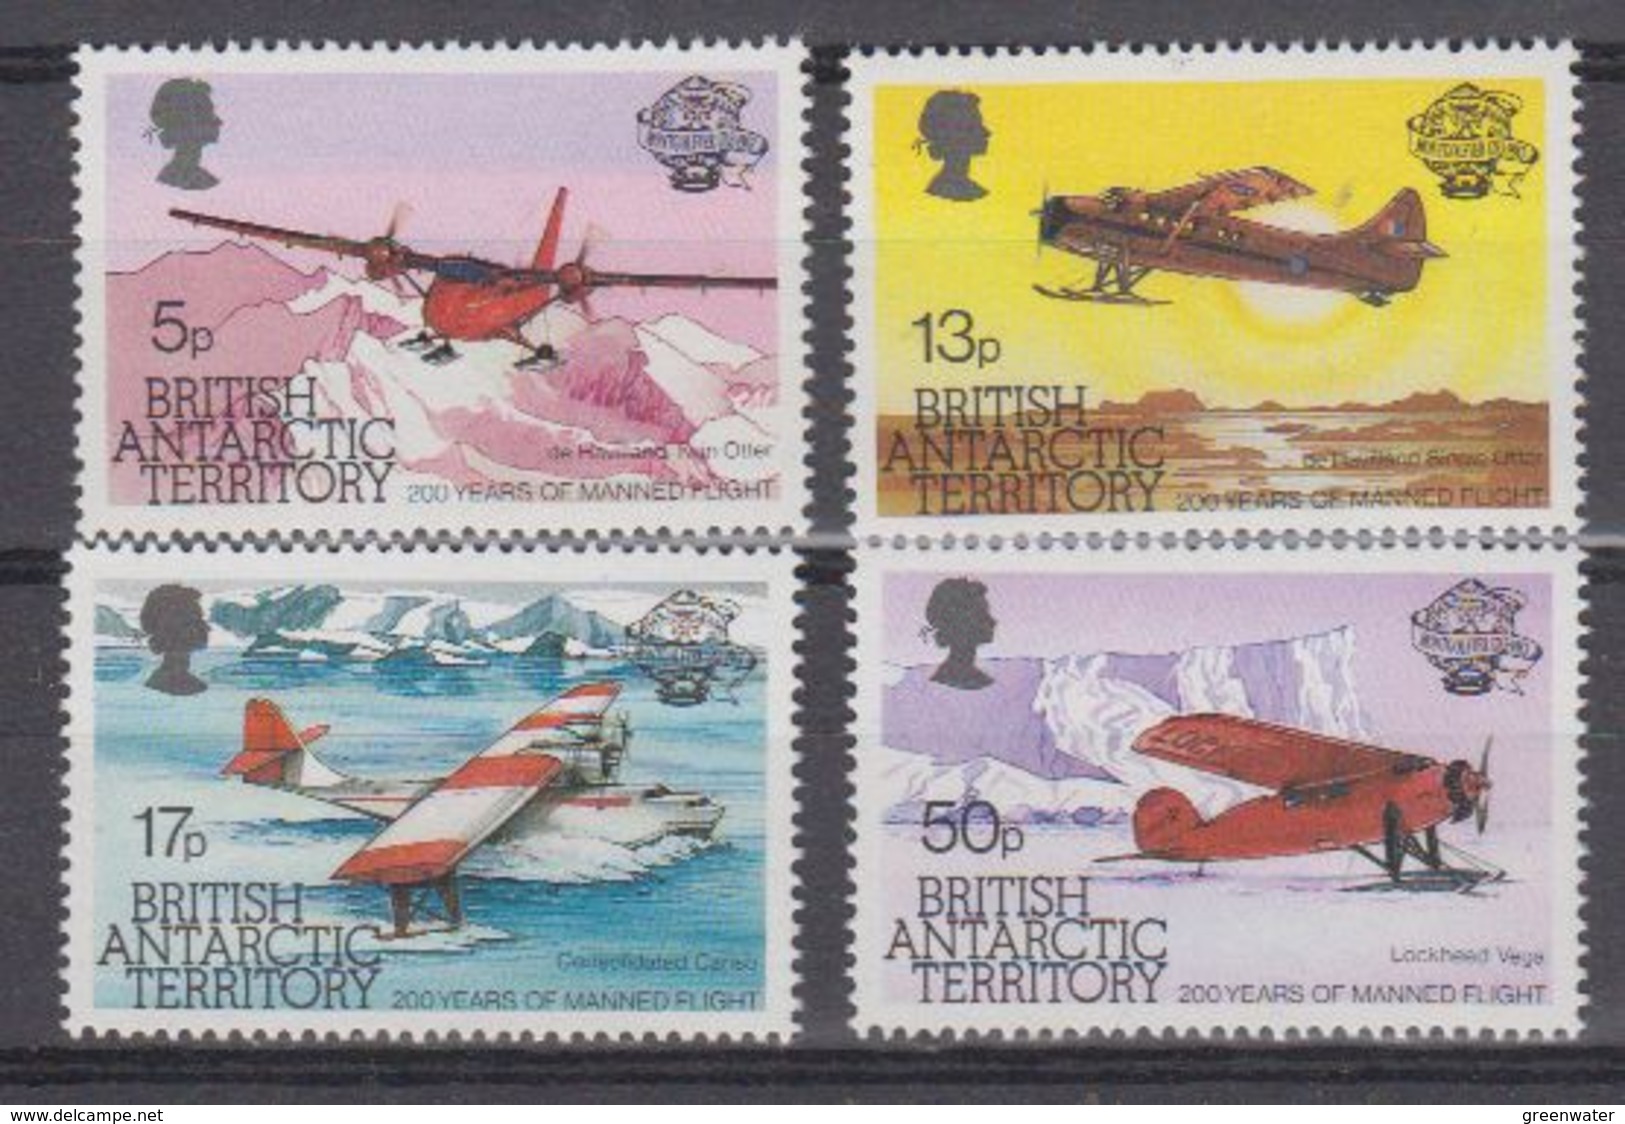 British Antarctic Territory 1983 Manned Flight 4v  ** Mnh (41655) - Nuovi